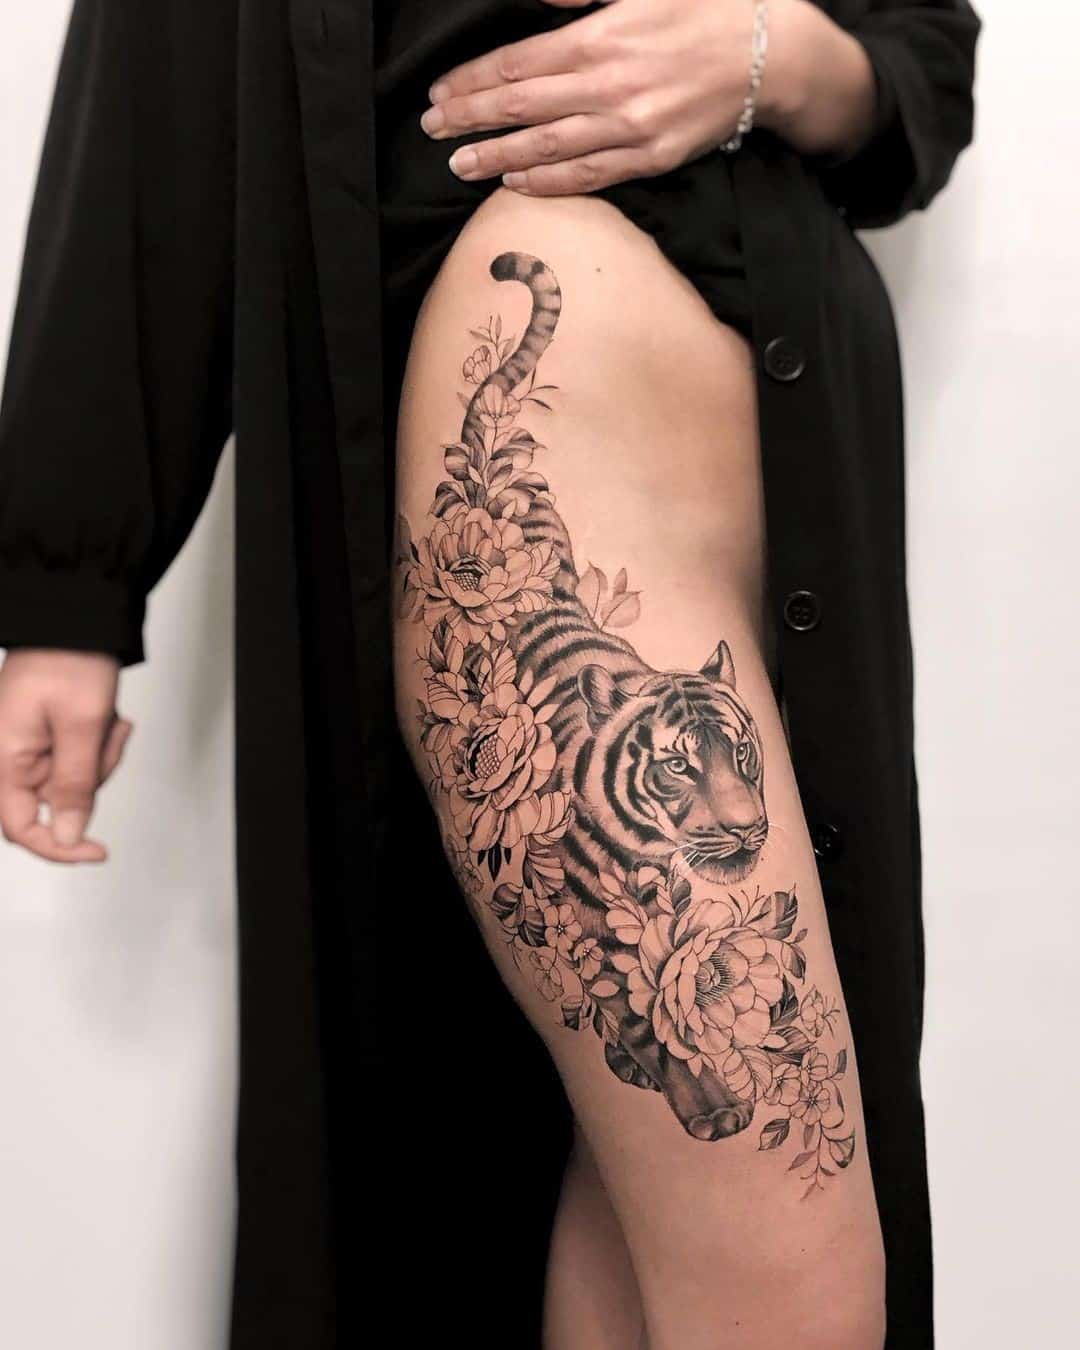 Tiger Tattoo On Thigh Black & White Ink